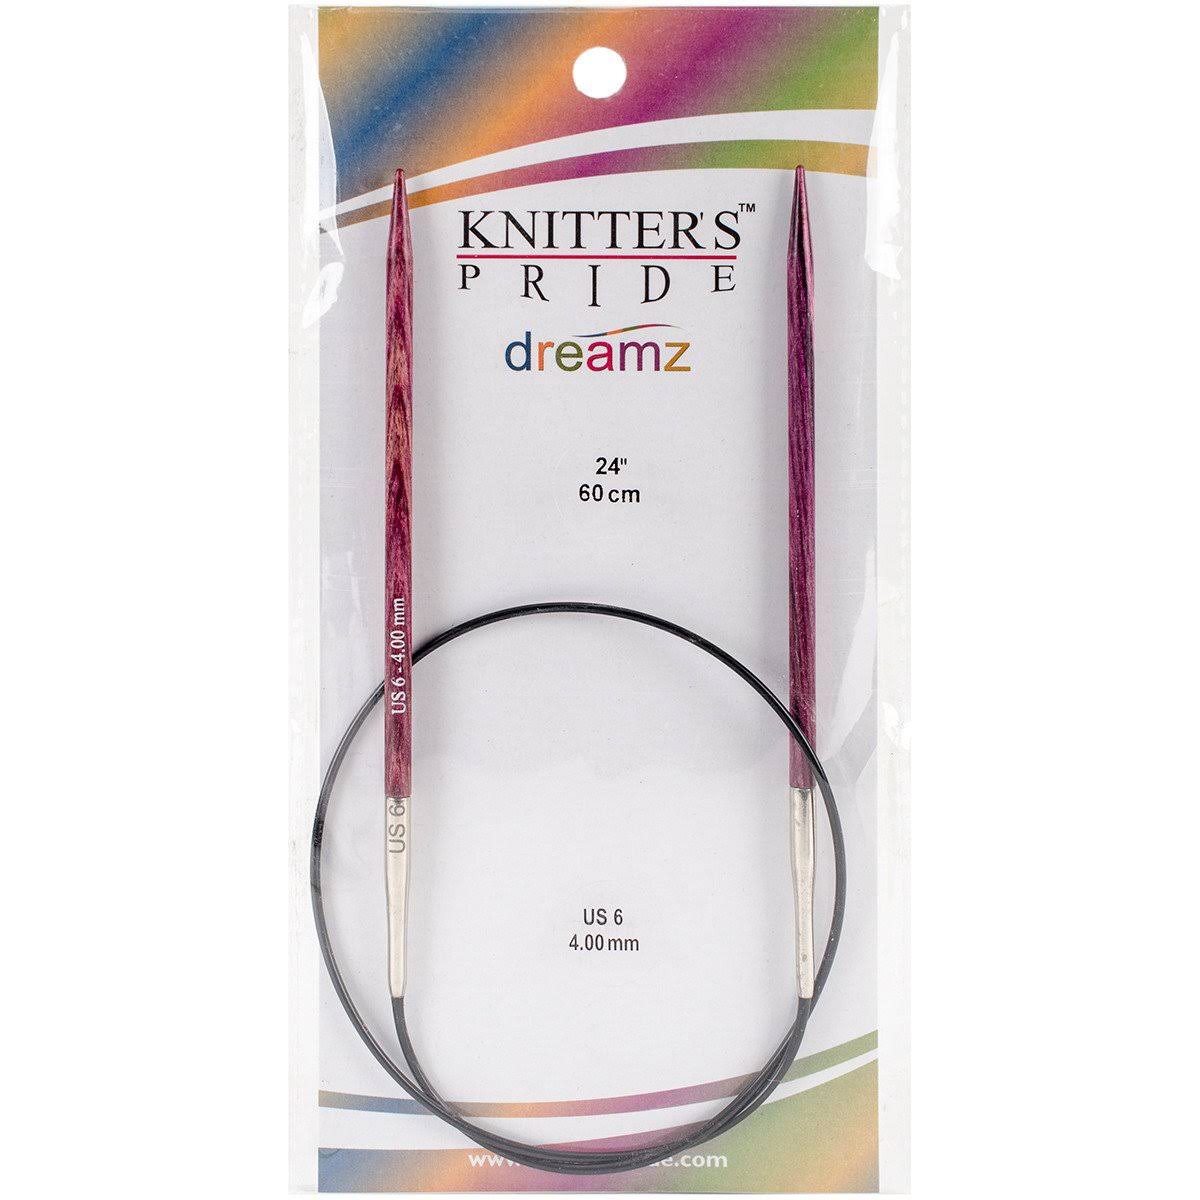 Knitter's Pride Dreamz Fixed Circular Needles - Size 6, 24"